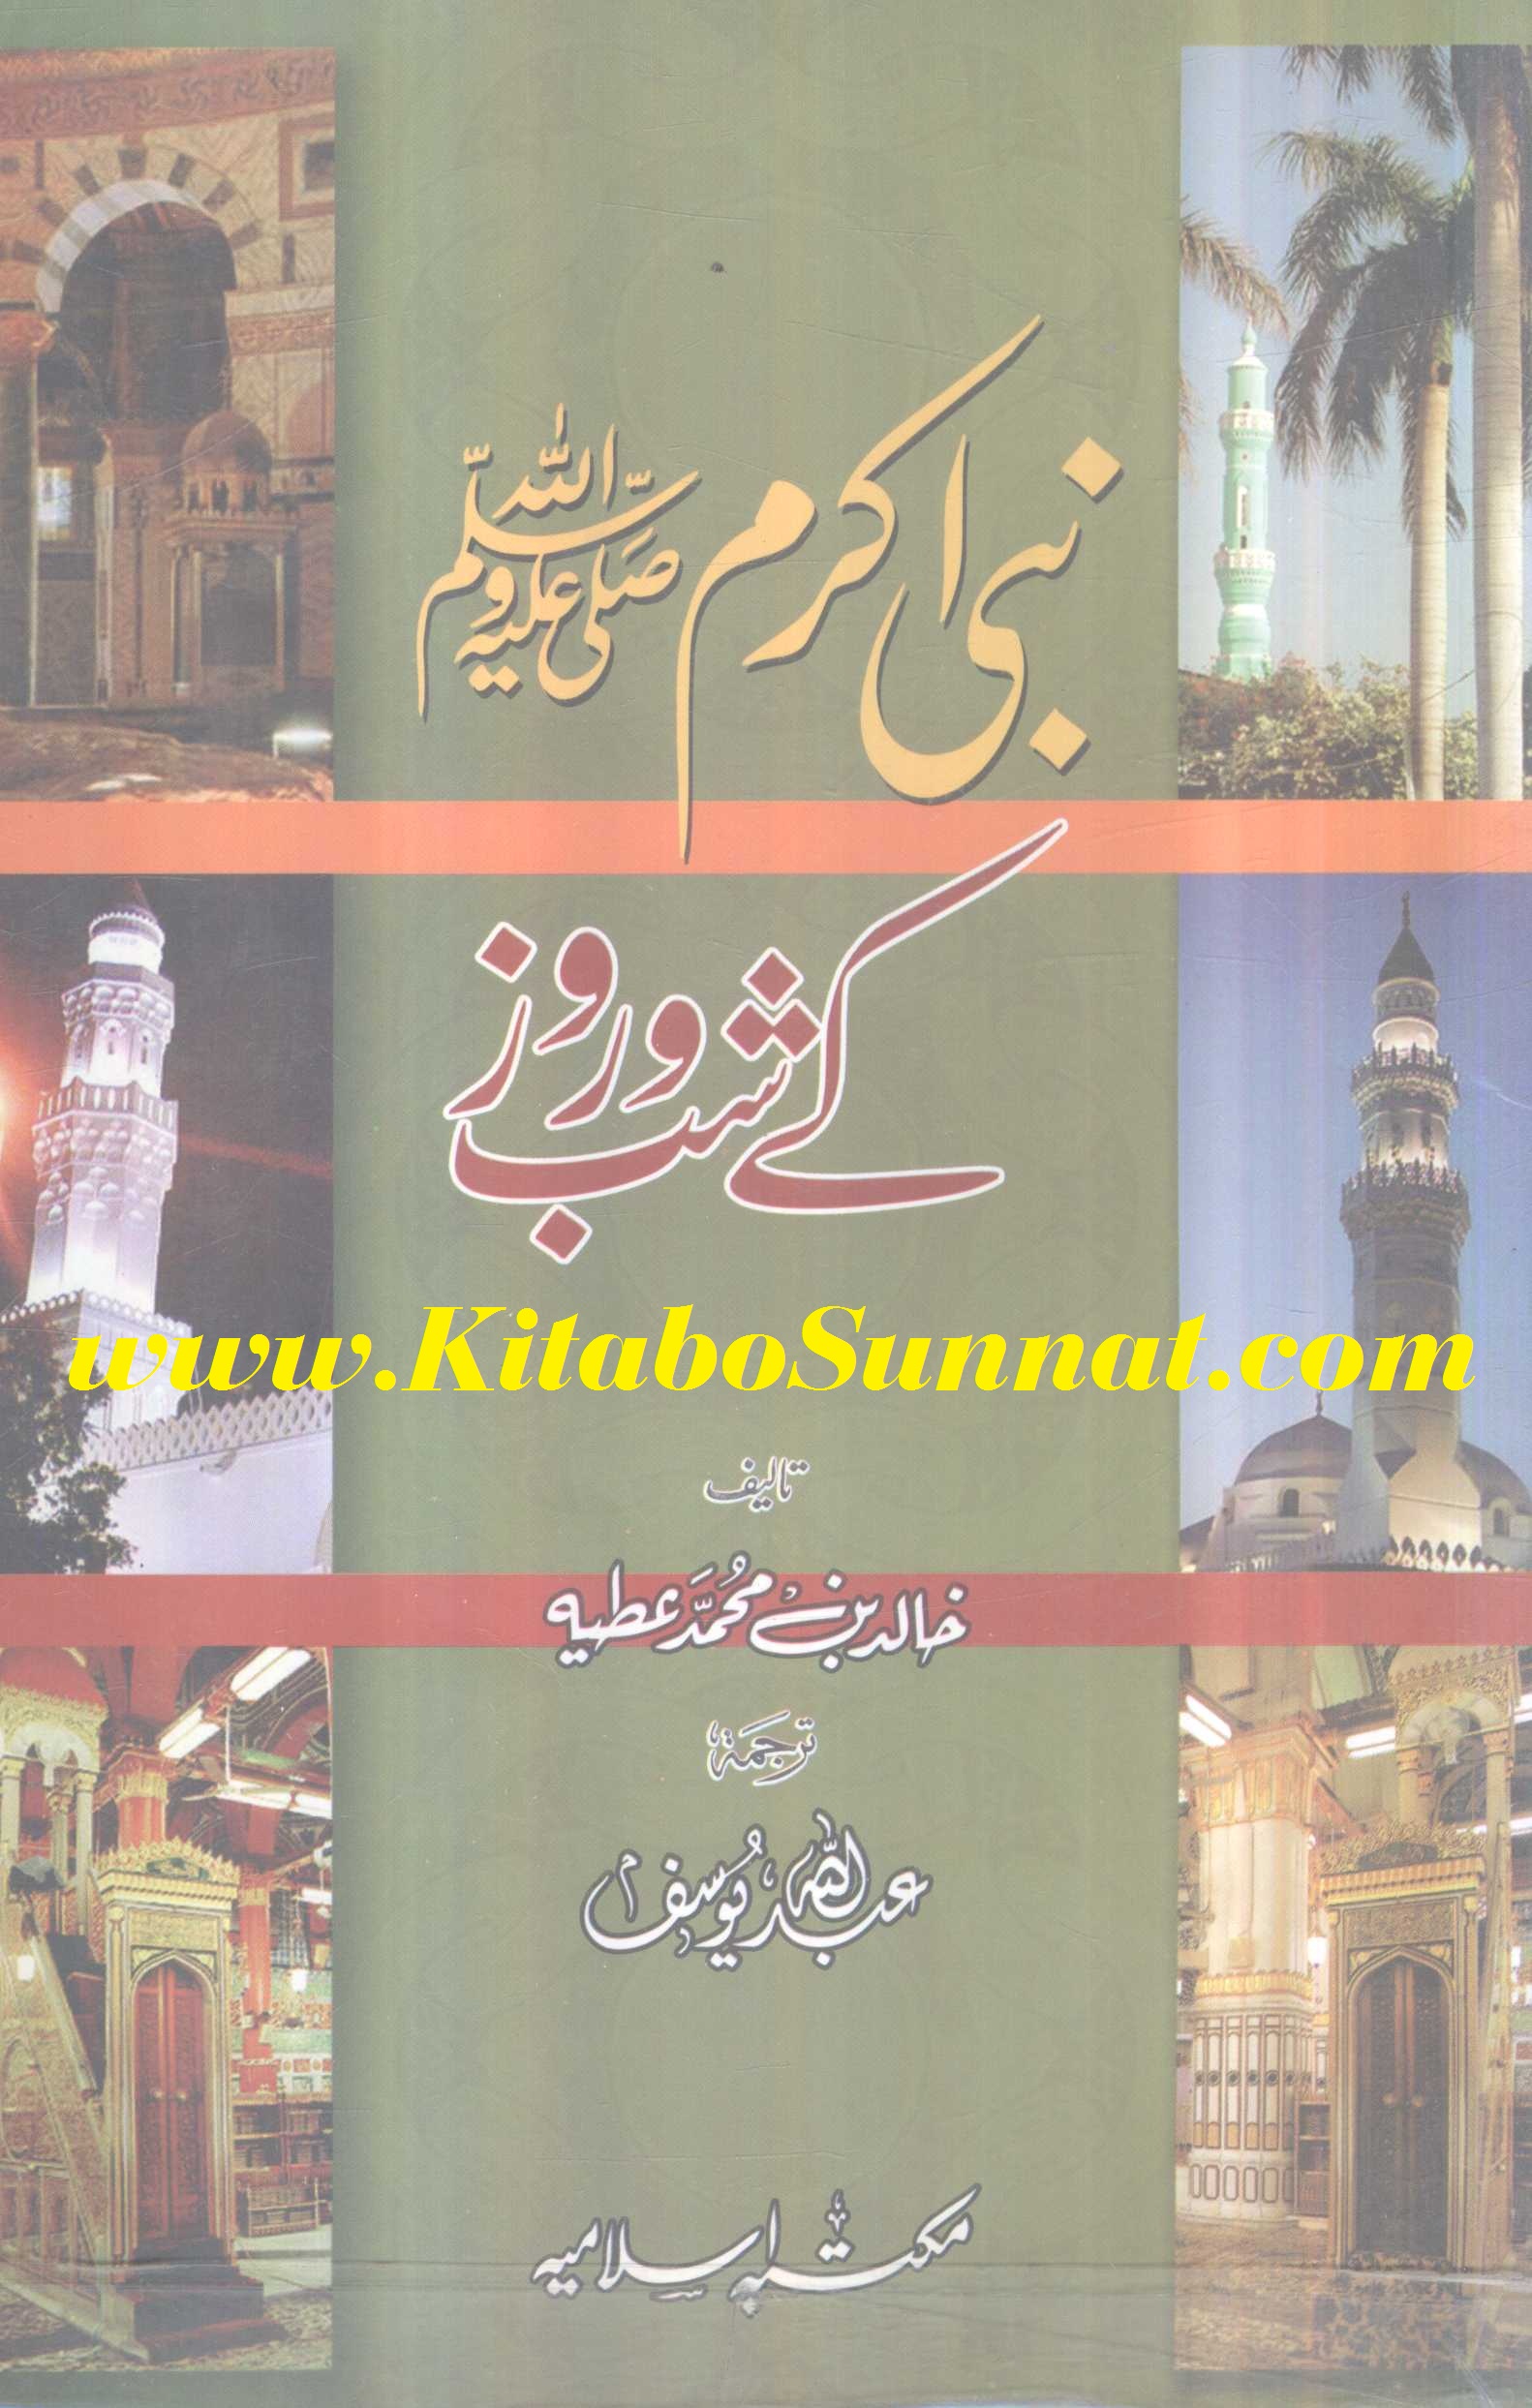 Title Pages --- Nabi-Akram-K-Shab-w-Roze.jpg